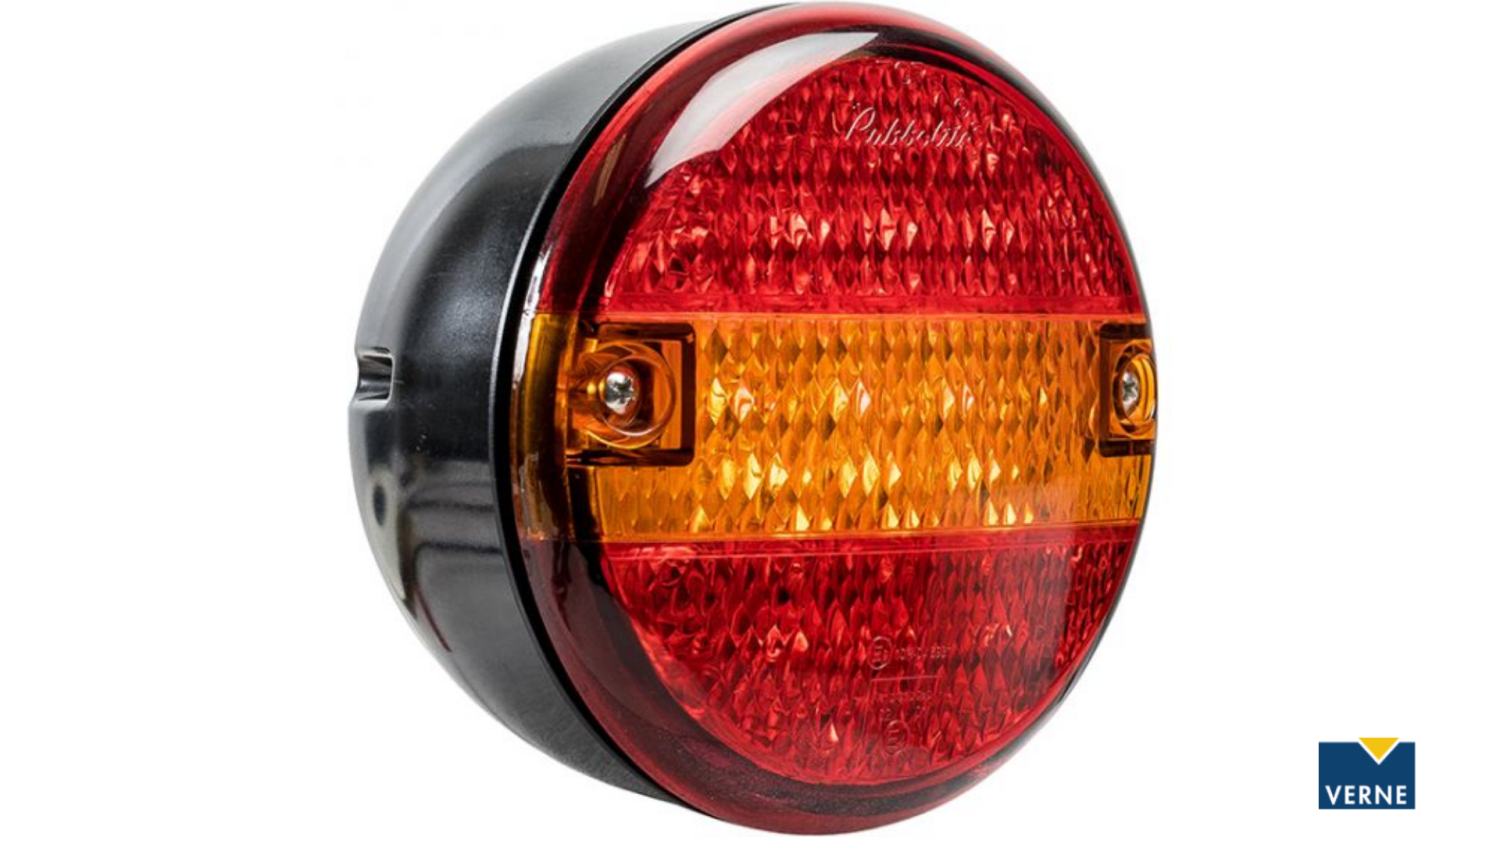 Truck-Lite baklykt LED rund rubbolite